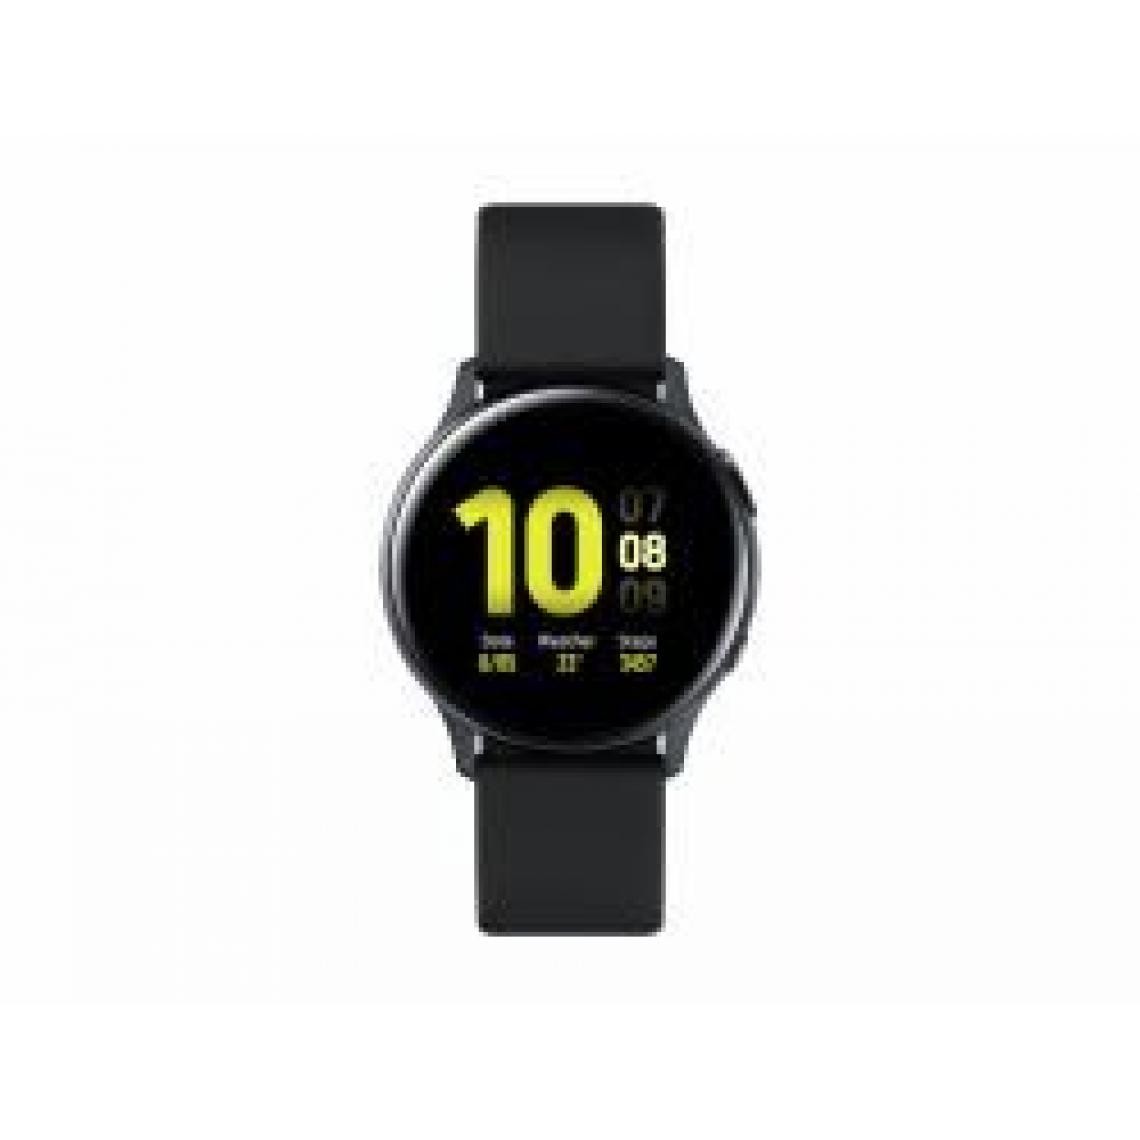 Mercury - Samsung Galaxy Watch Active 2 montre intelligente Noir SAMOLED 3,02 cm [1.19] GPS [satellite] (Samsung Gal Watch Act2 UA Ed. 40mm Alu - Blk) - Montre connectée